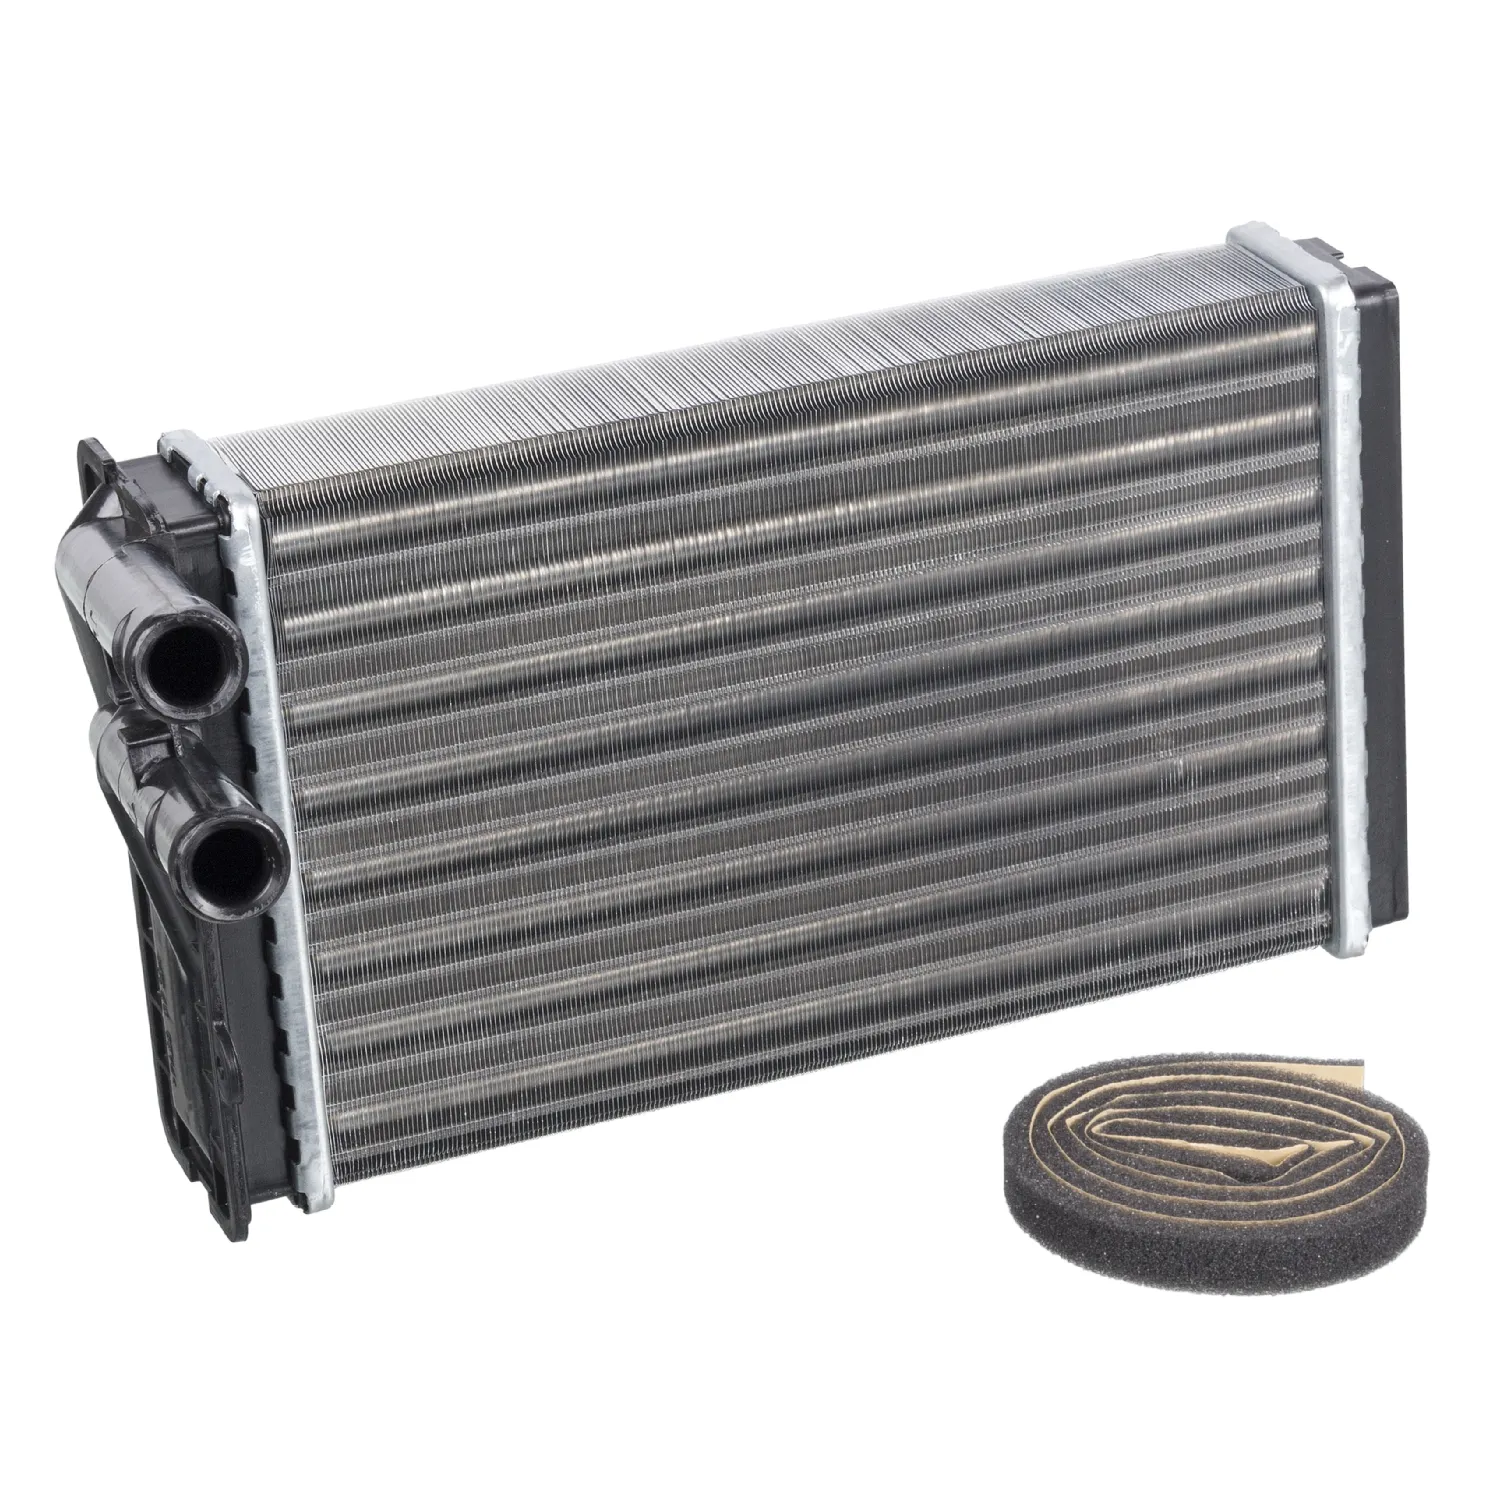 Heater radiator, interior heating